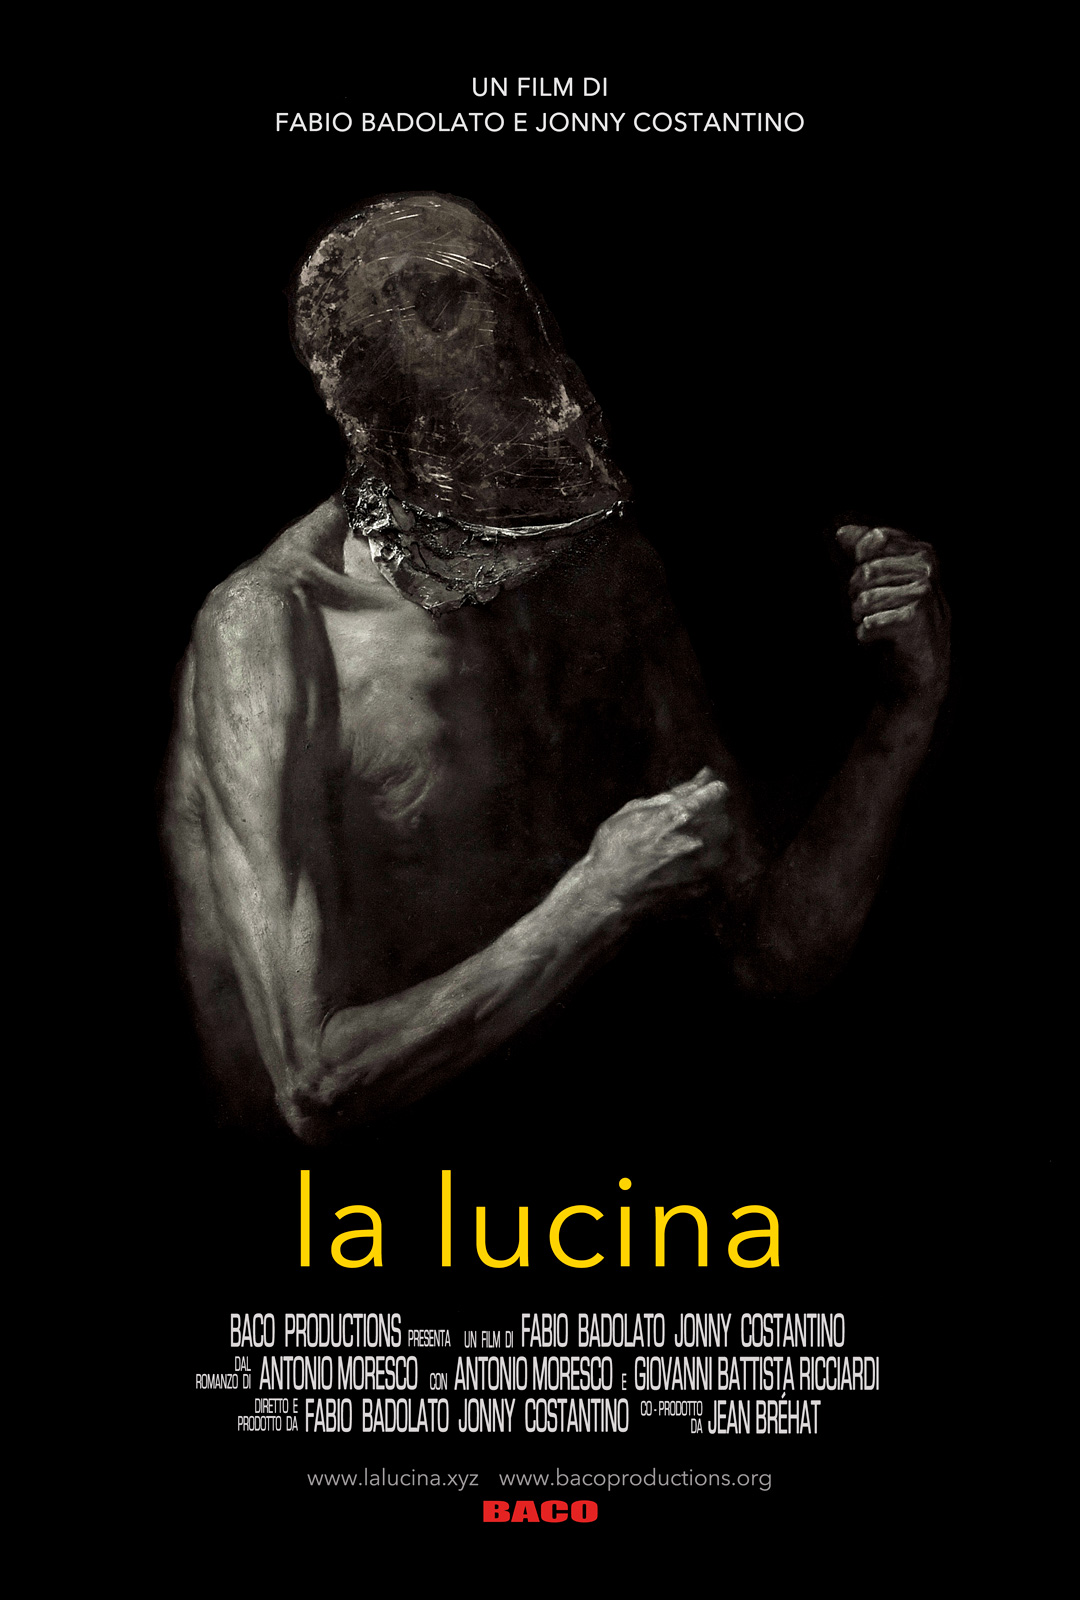 La lucina poster from a painting by Nicola Samorì. A film by Fabio Badolato and Jonny Costantino. Starring Antonio Morescco.